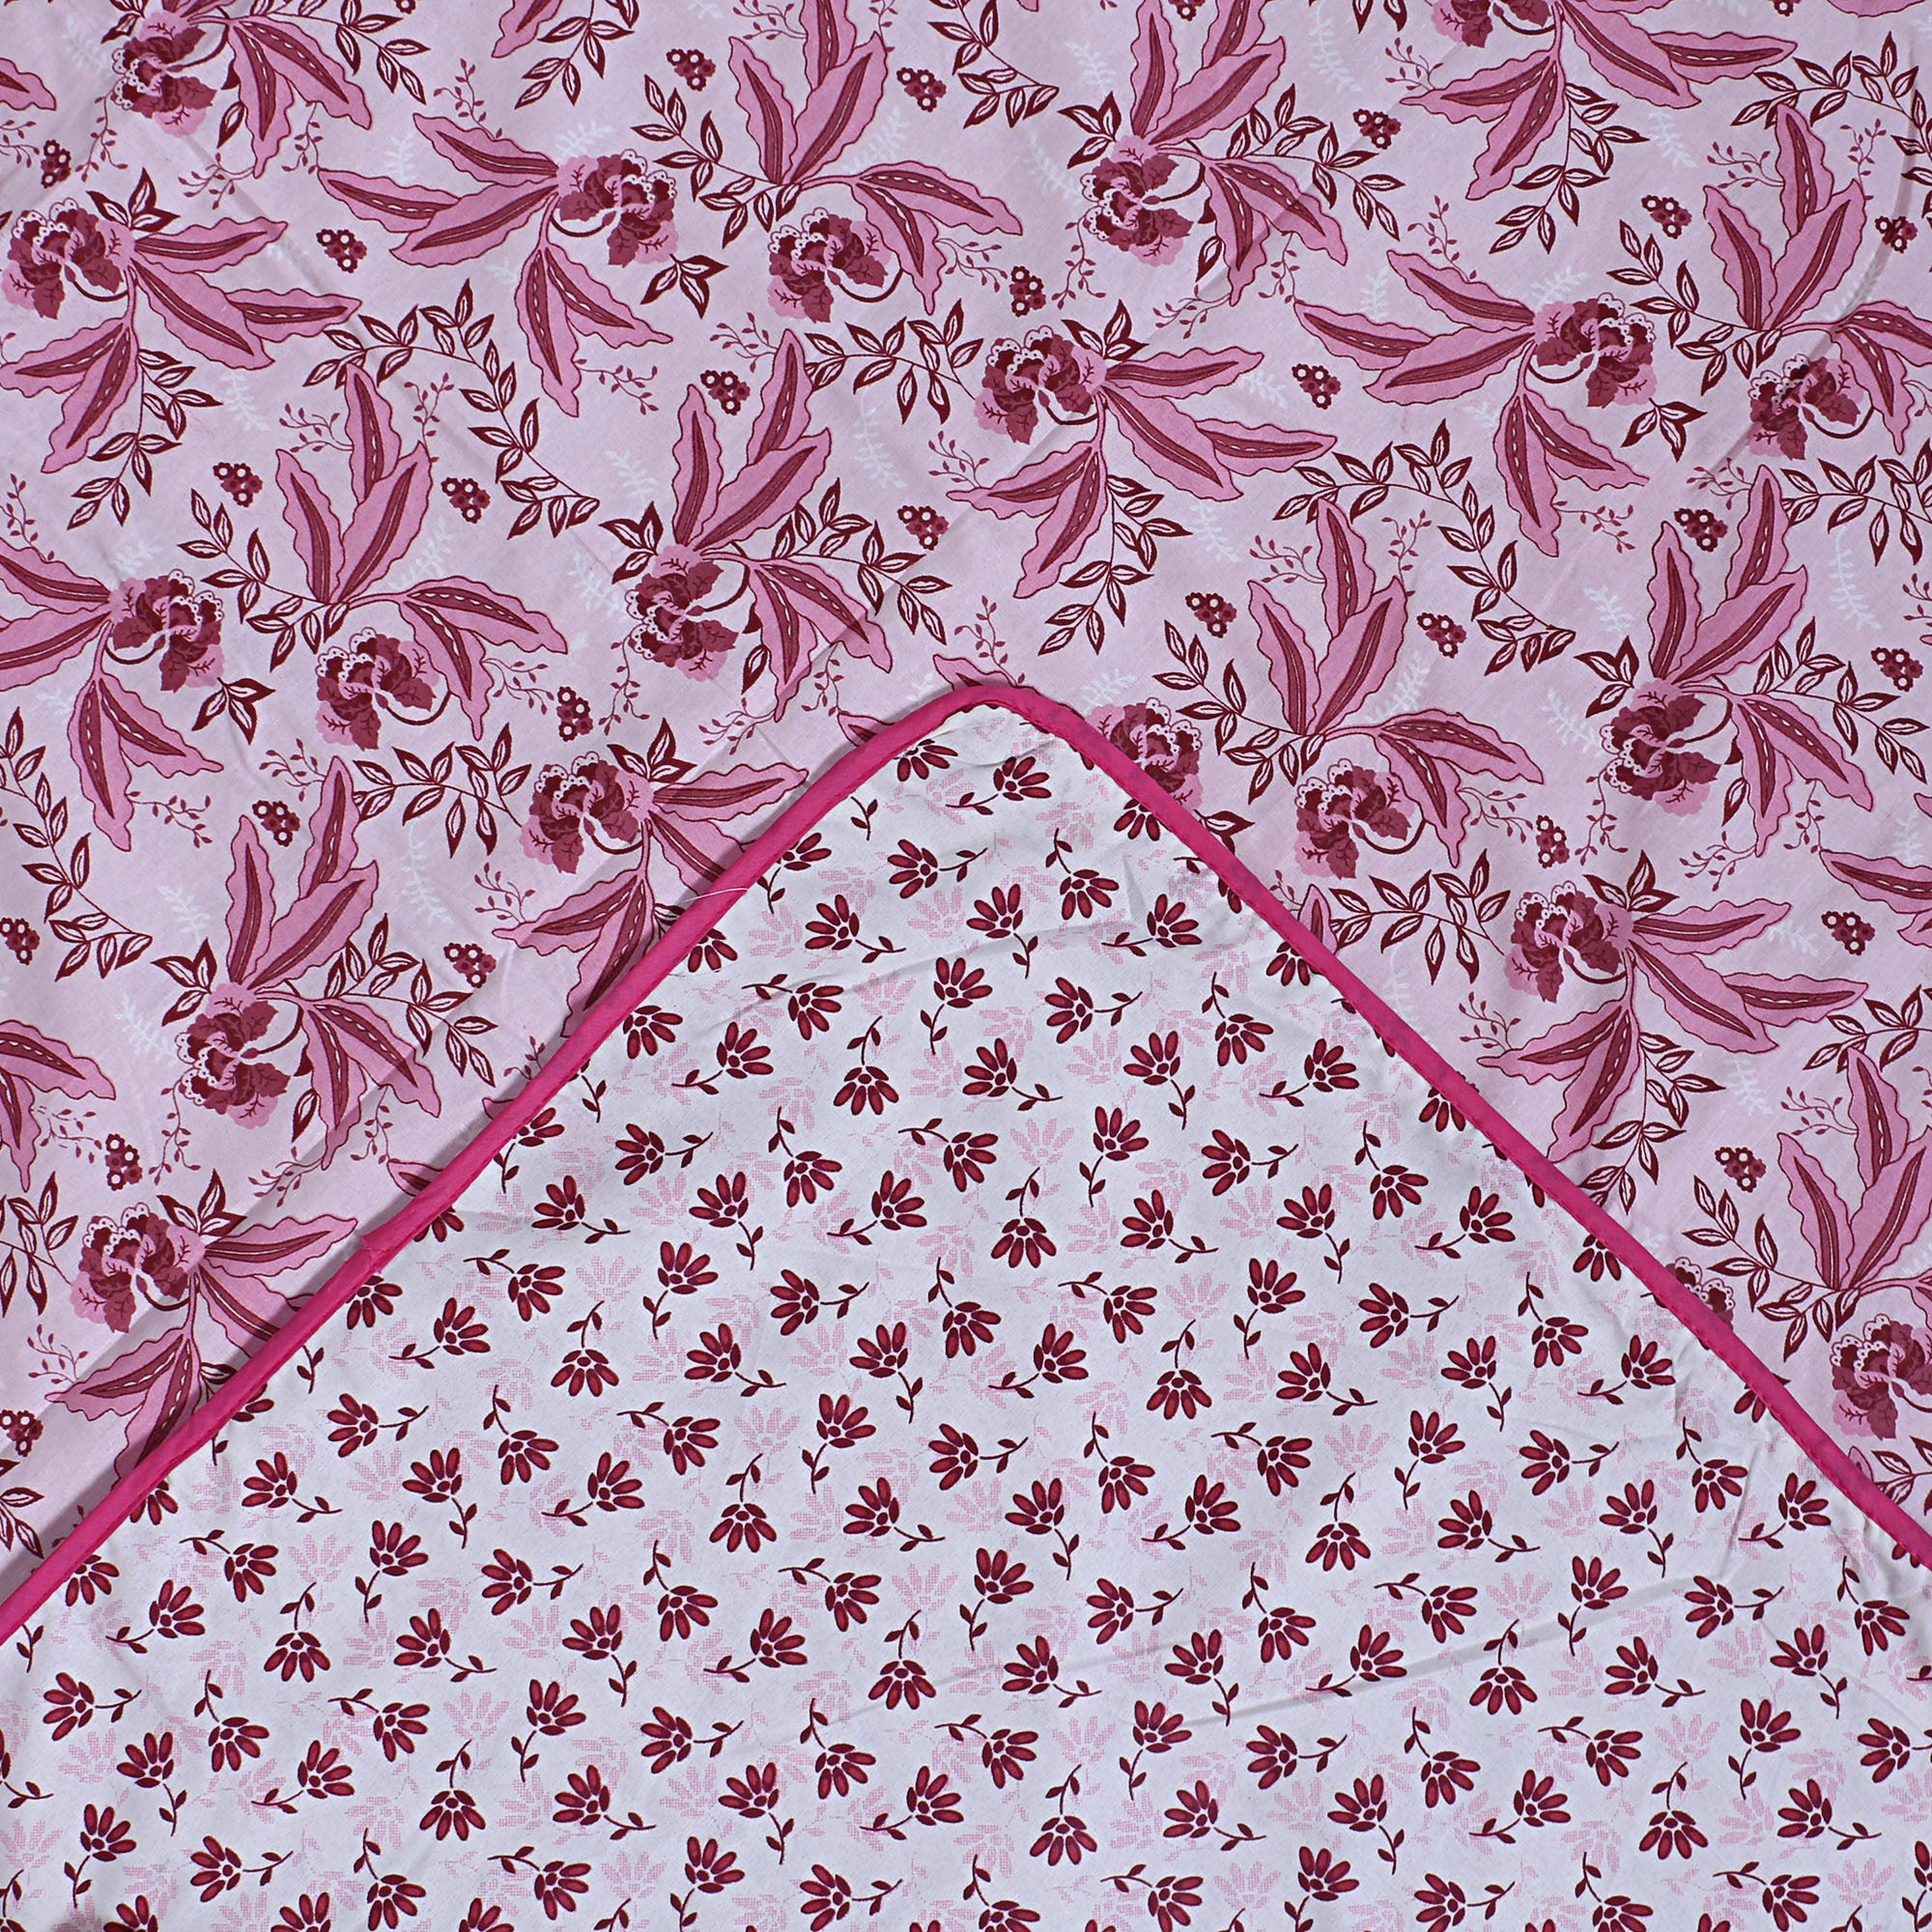 Kuber Industries Cotton Soft Lightweight Tropical Plant Design Reversible Single Bed Dohar | Blanket | AC Quilt for Home & Travel (Pink)